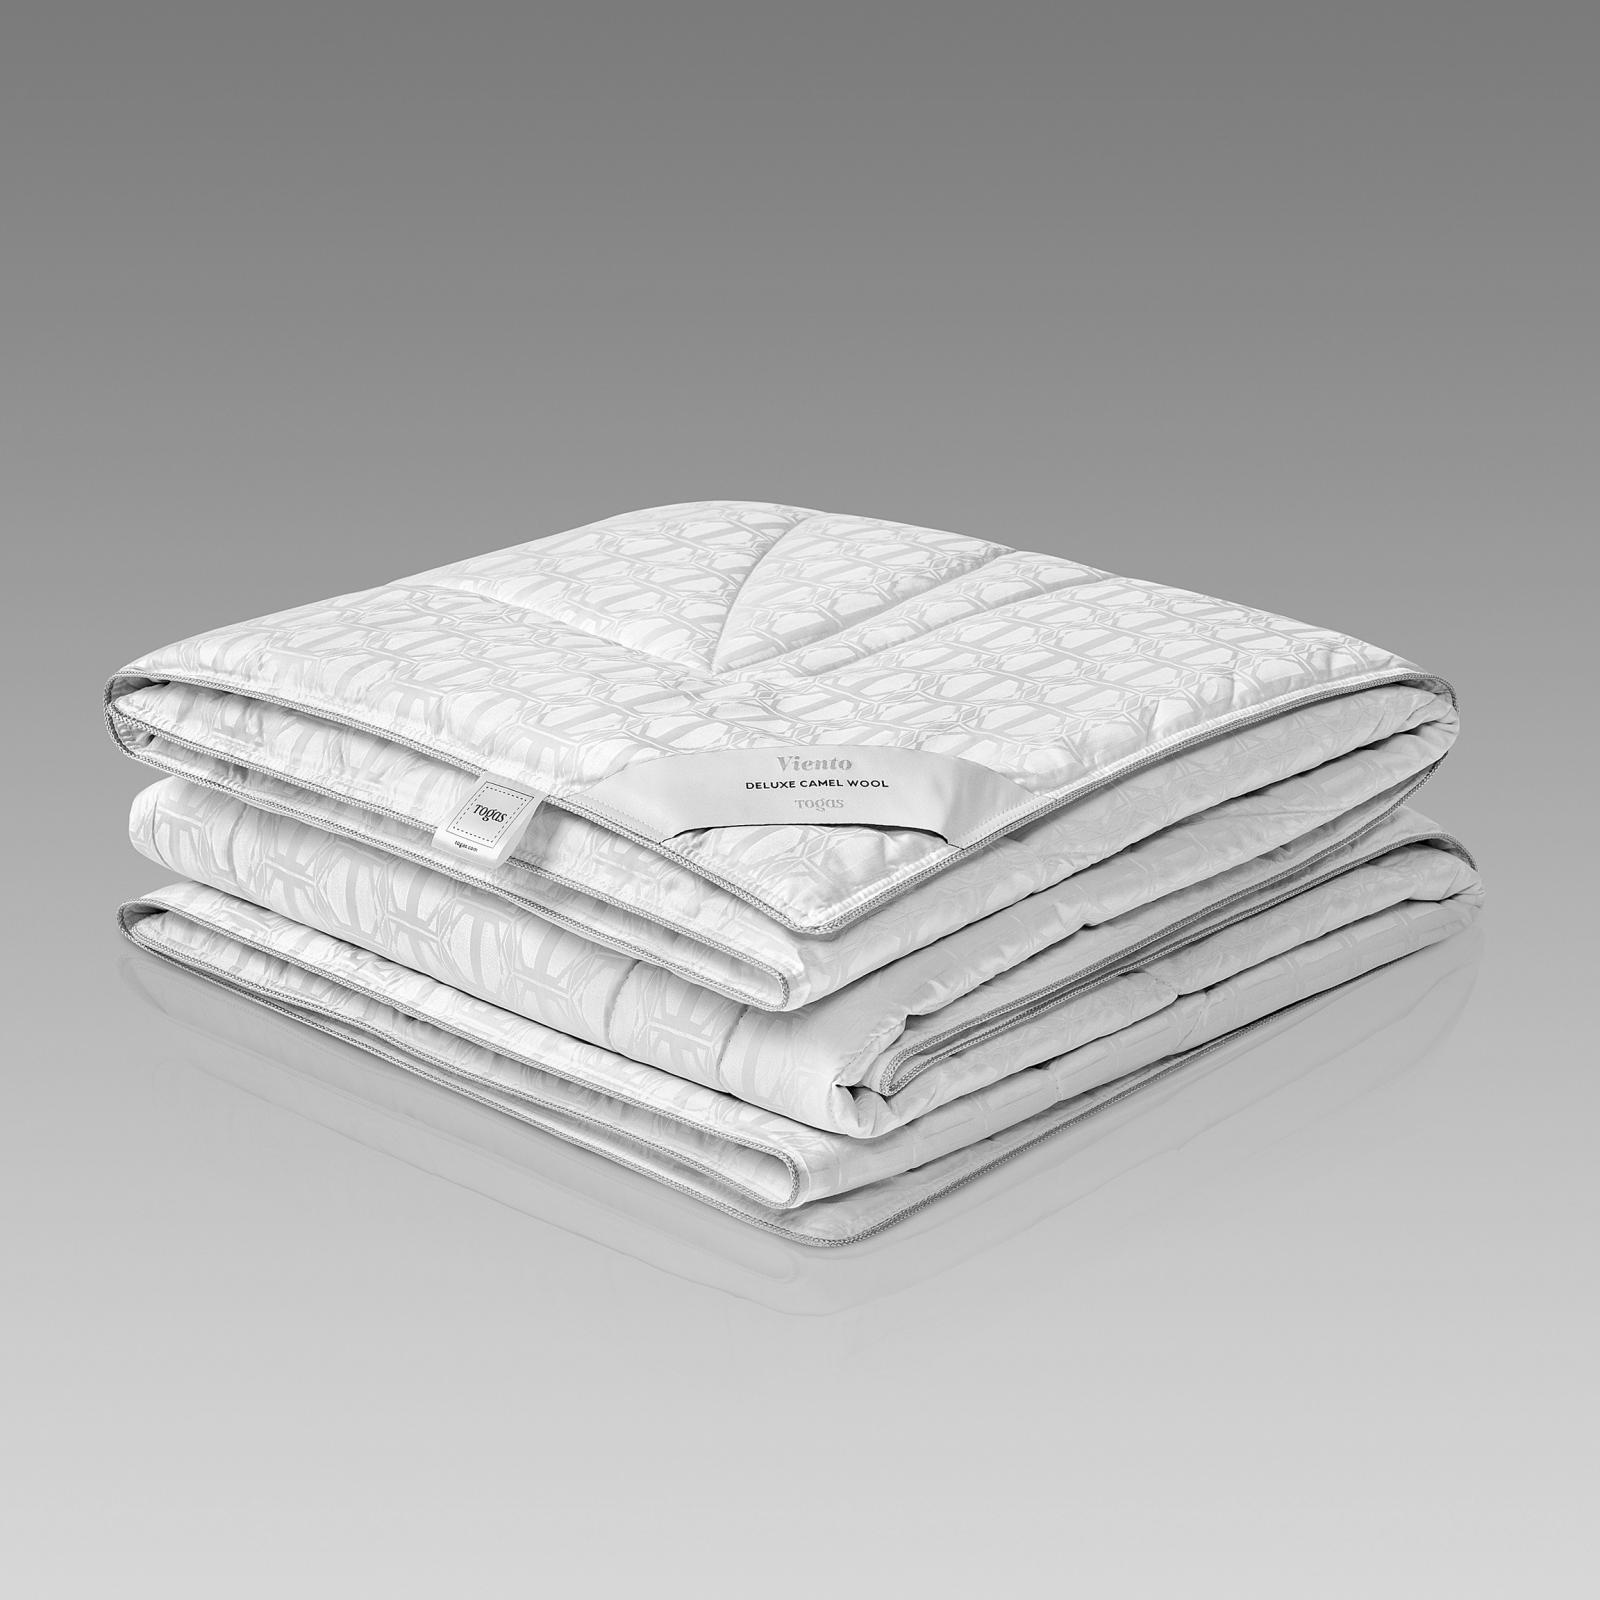 Одеяло Виенто Togas 140х200, размер 140х200 см - фото 4